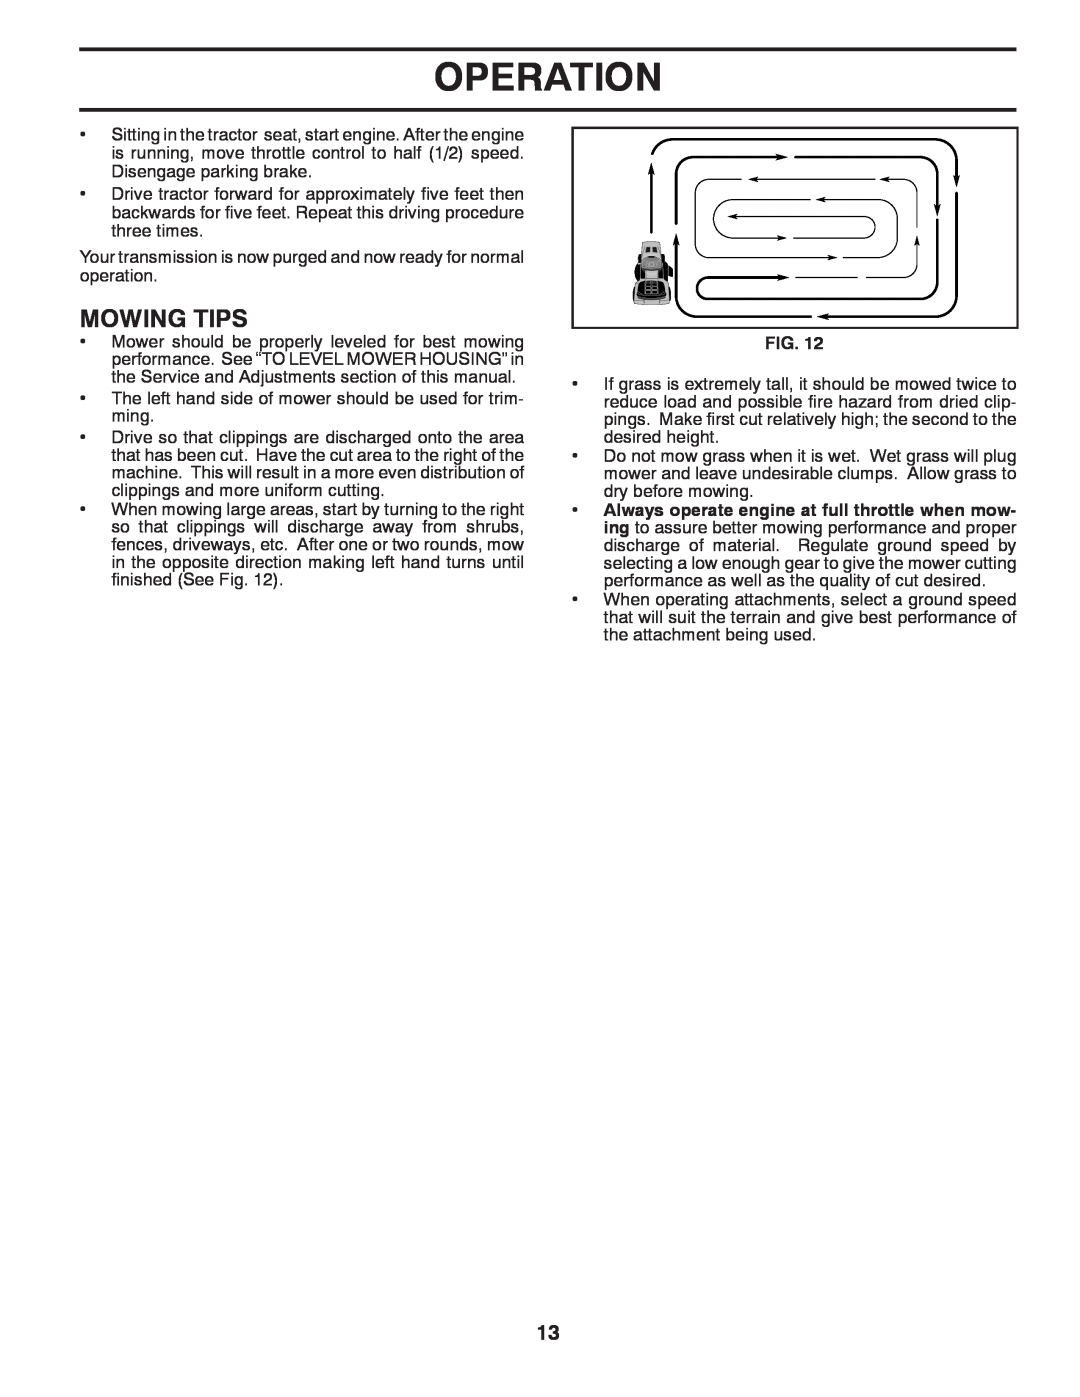 Husqvarna 2748 GLS (CA) manual Mowing Tips, Operation 